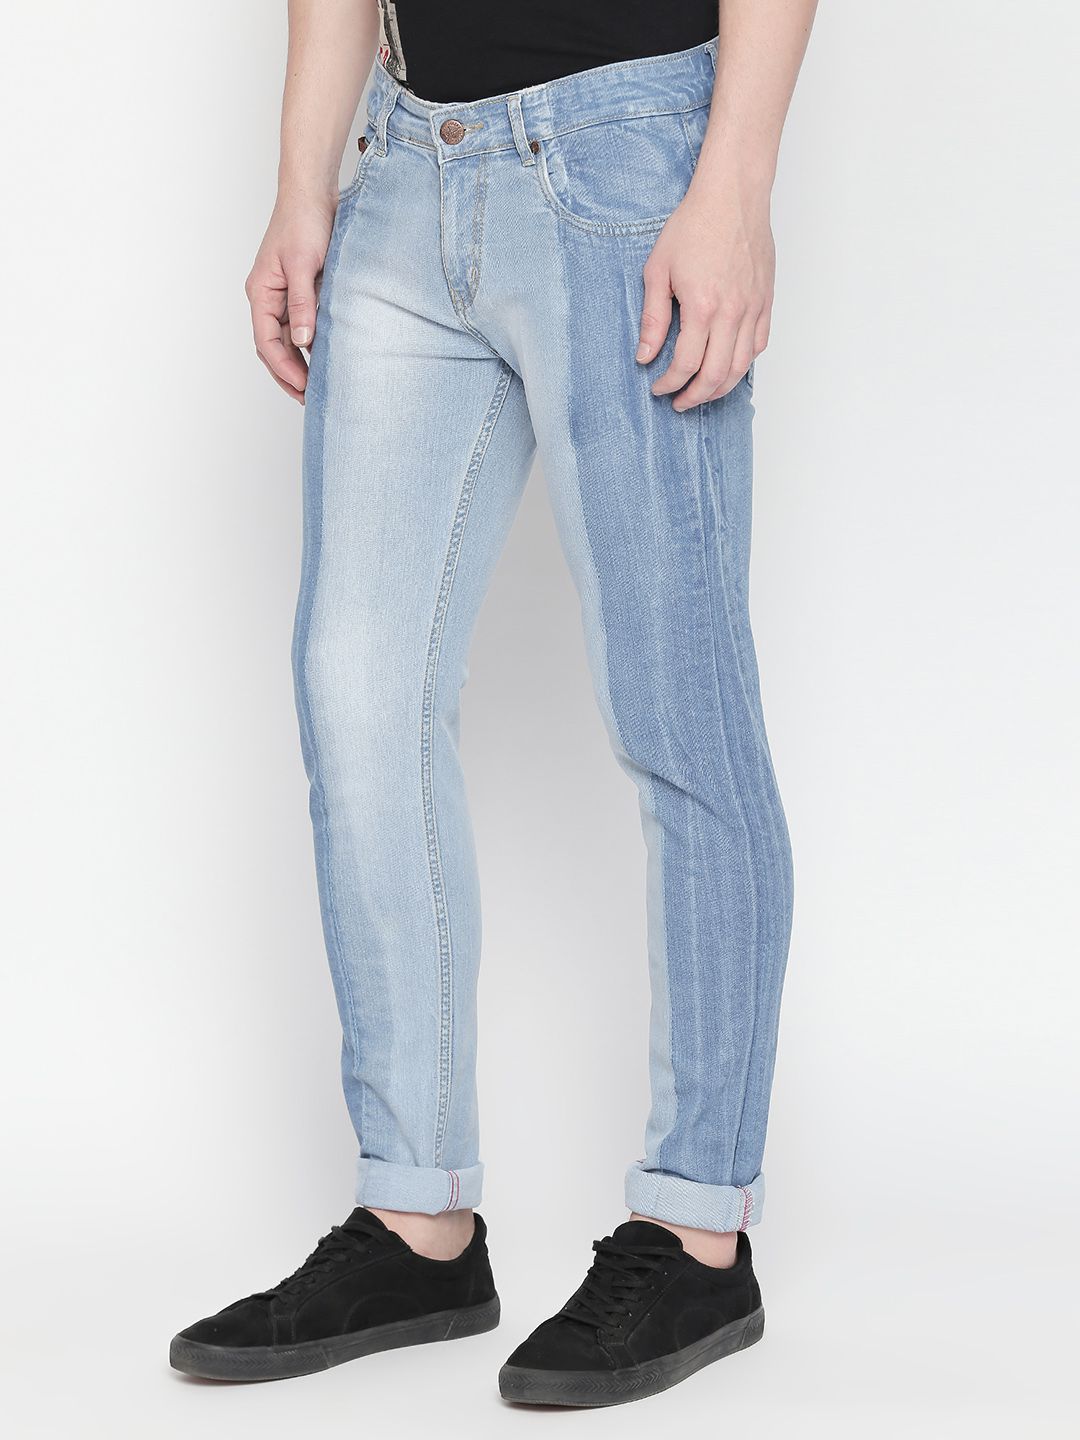 BOLTS and BARRELS Light Blue Slim Jeans - Buy BOLTS and BARRELS Light ...